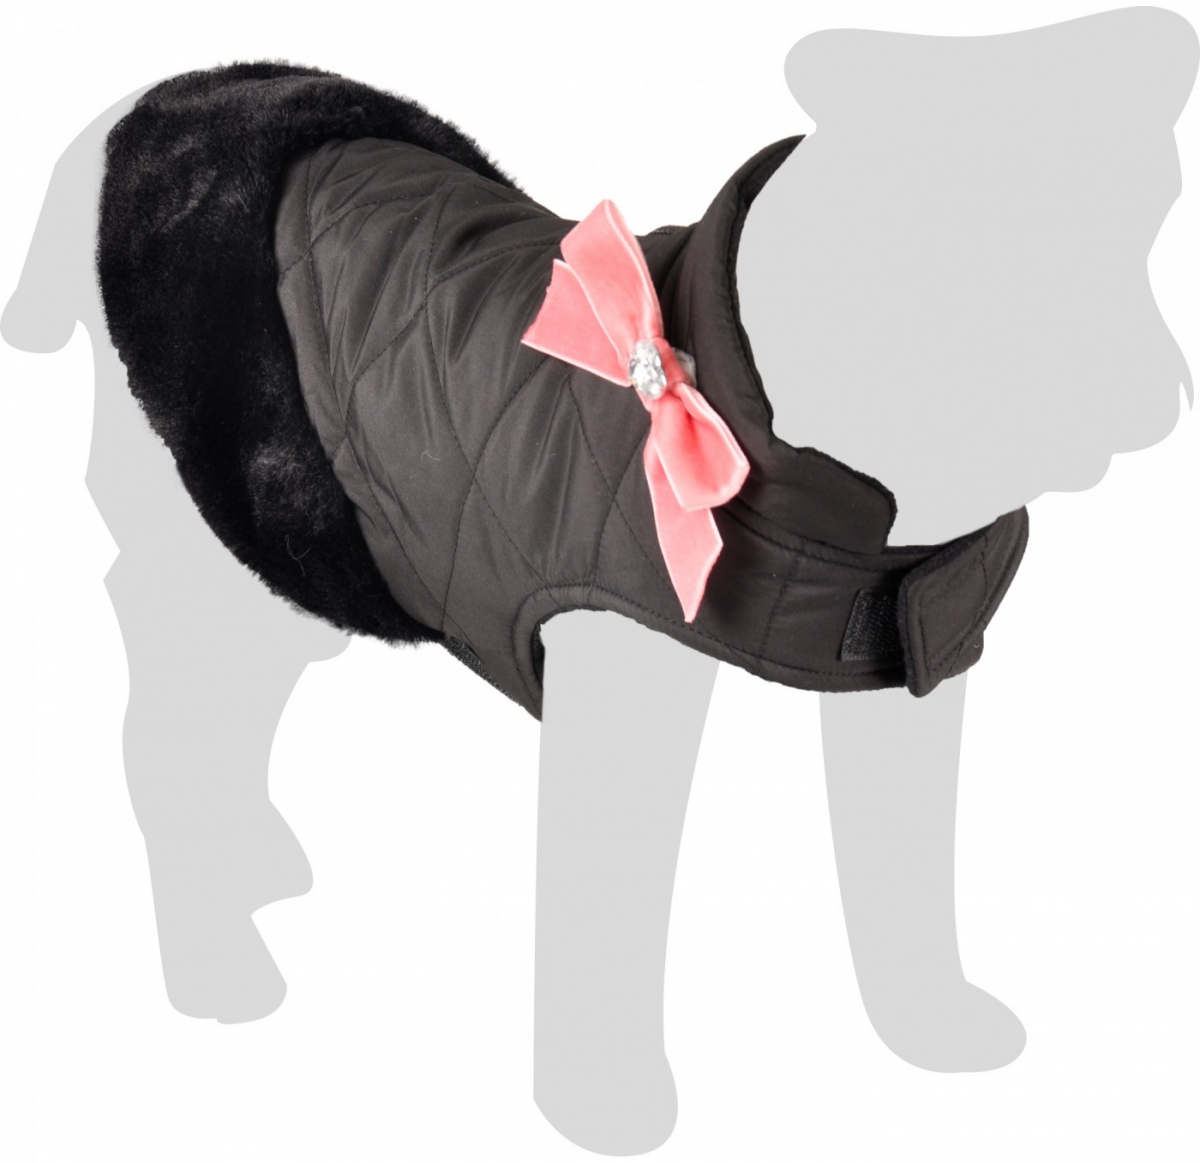 manteau chien zoomalia